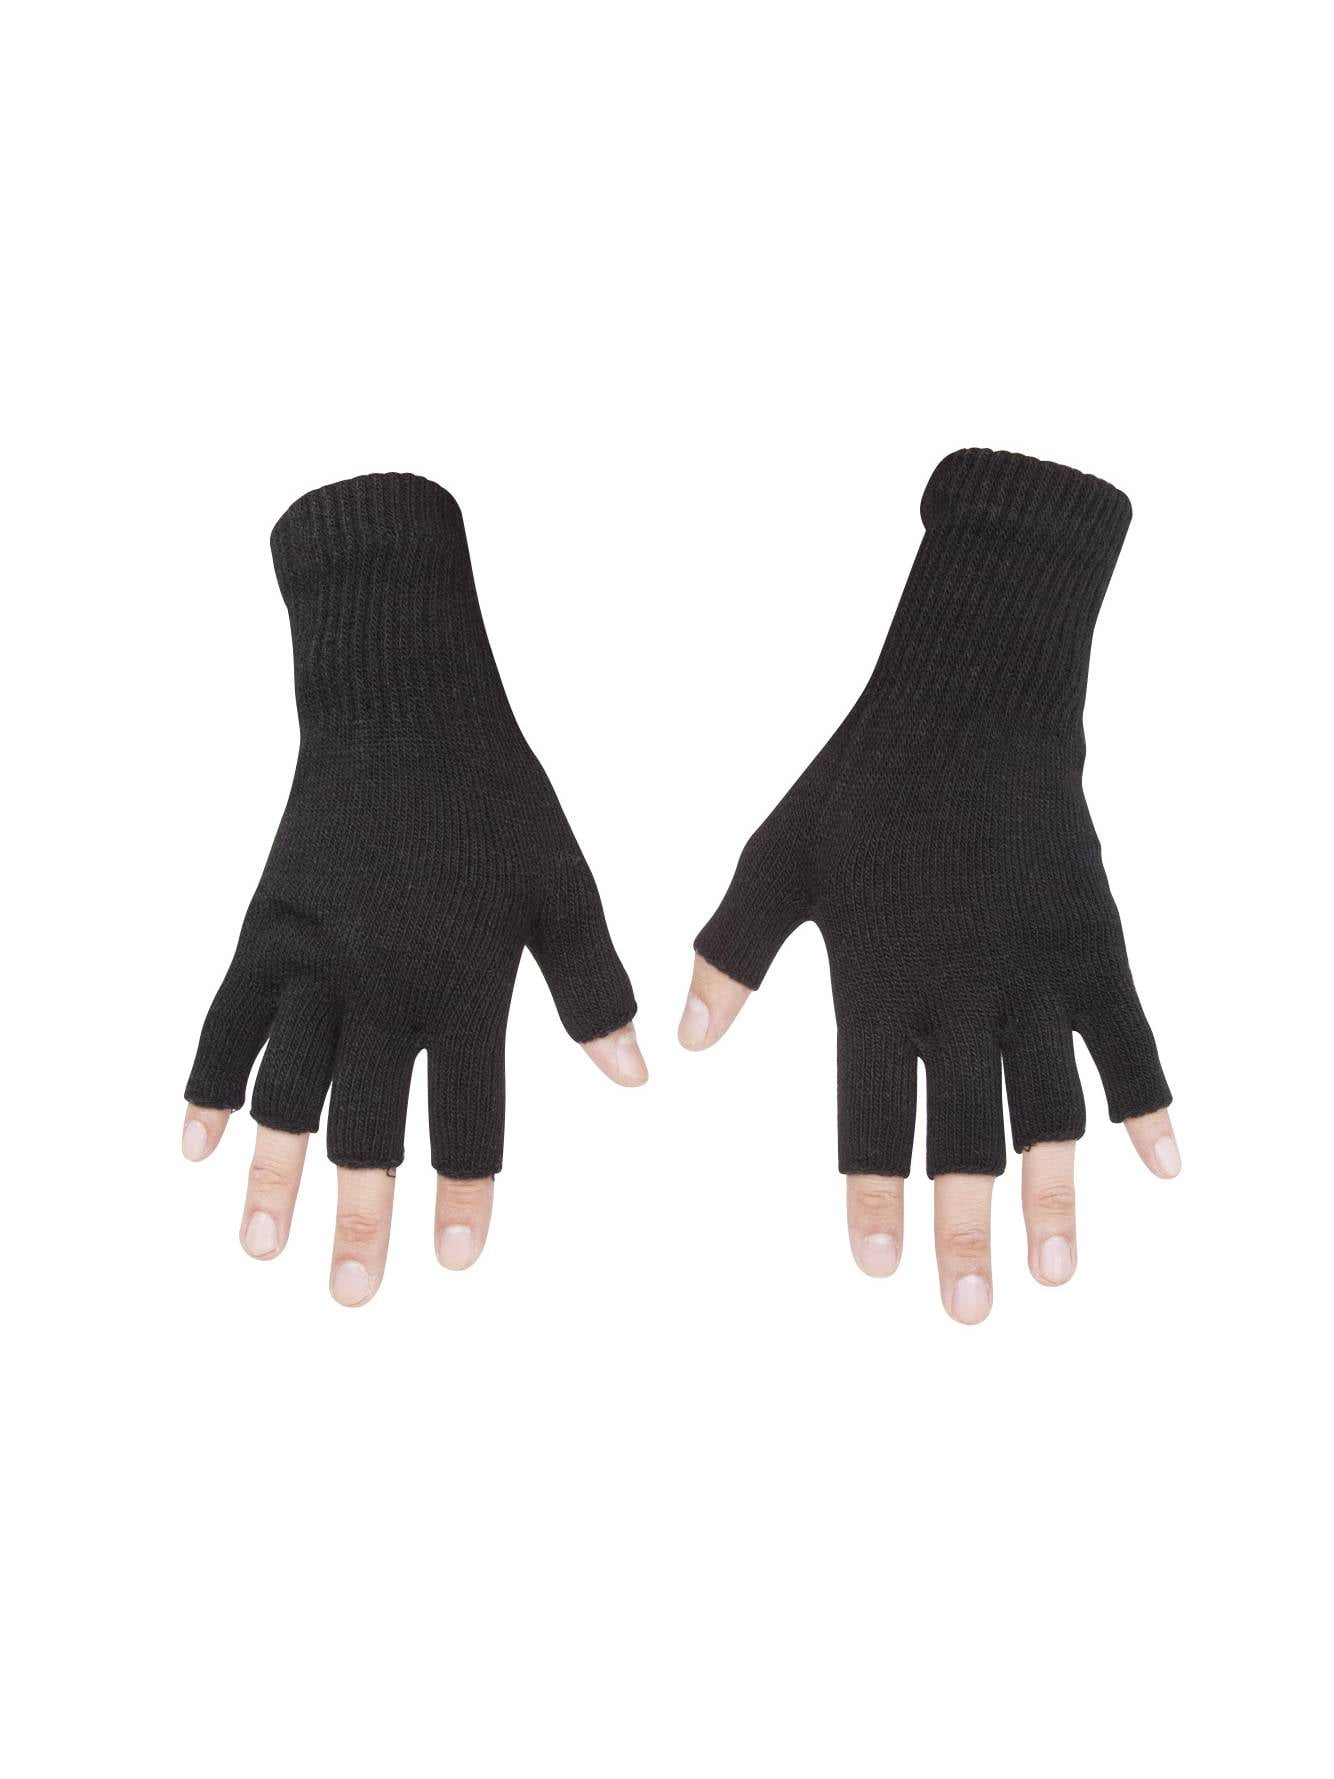 Threads Knit Half Gravity Navy Finger Fingerless Warm Blue Gloves, Stretchy Unisex